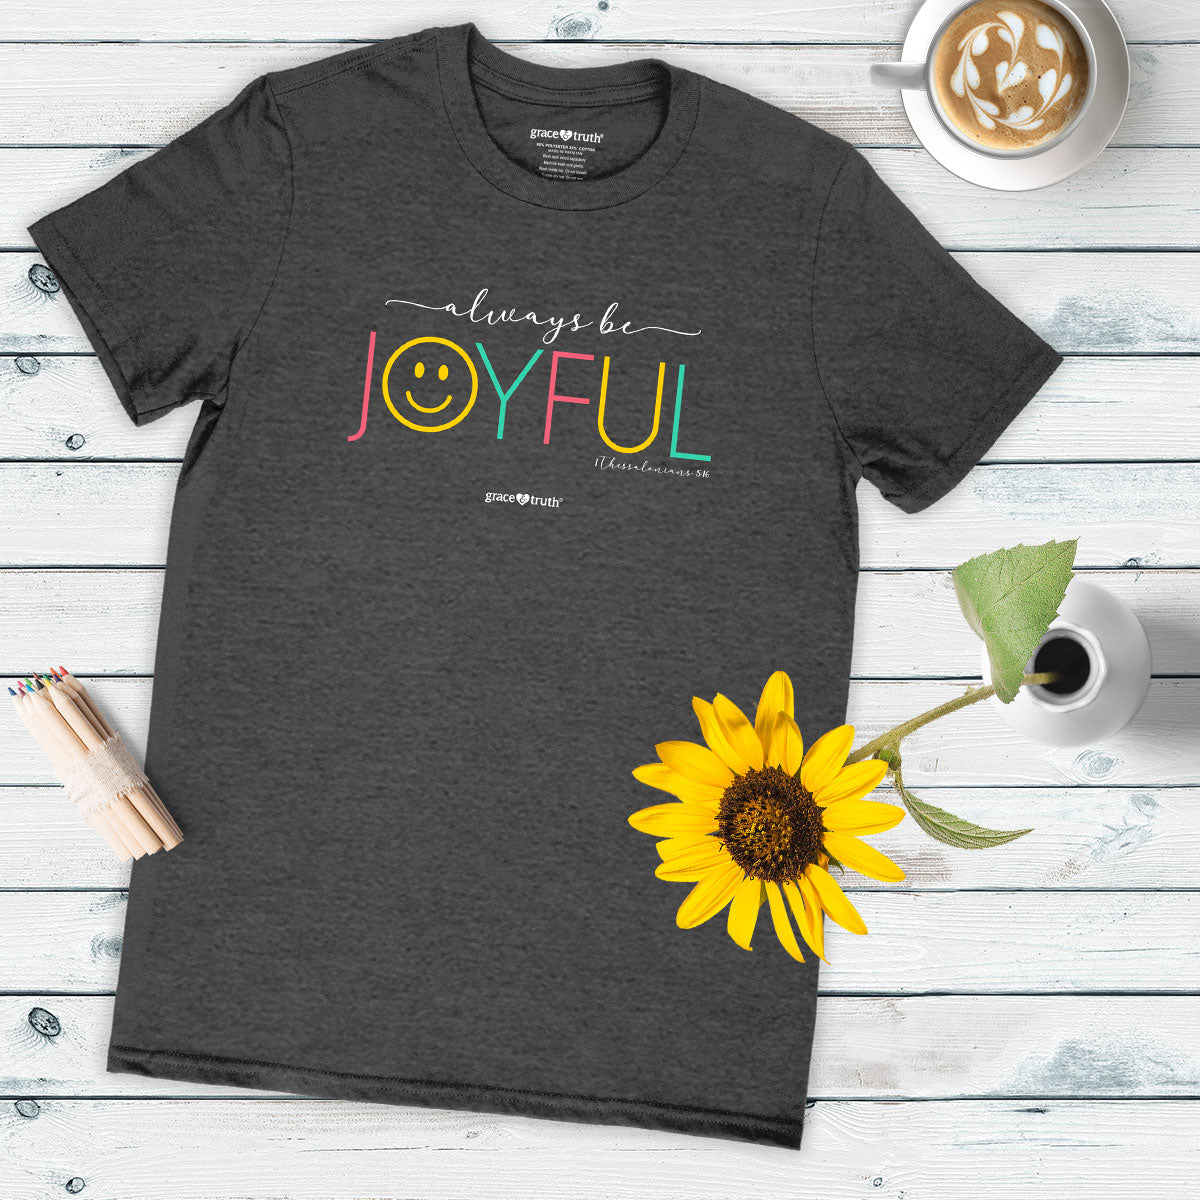 grace & truth Womens T-Shirt Joyful Smile | 2FruitBearers